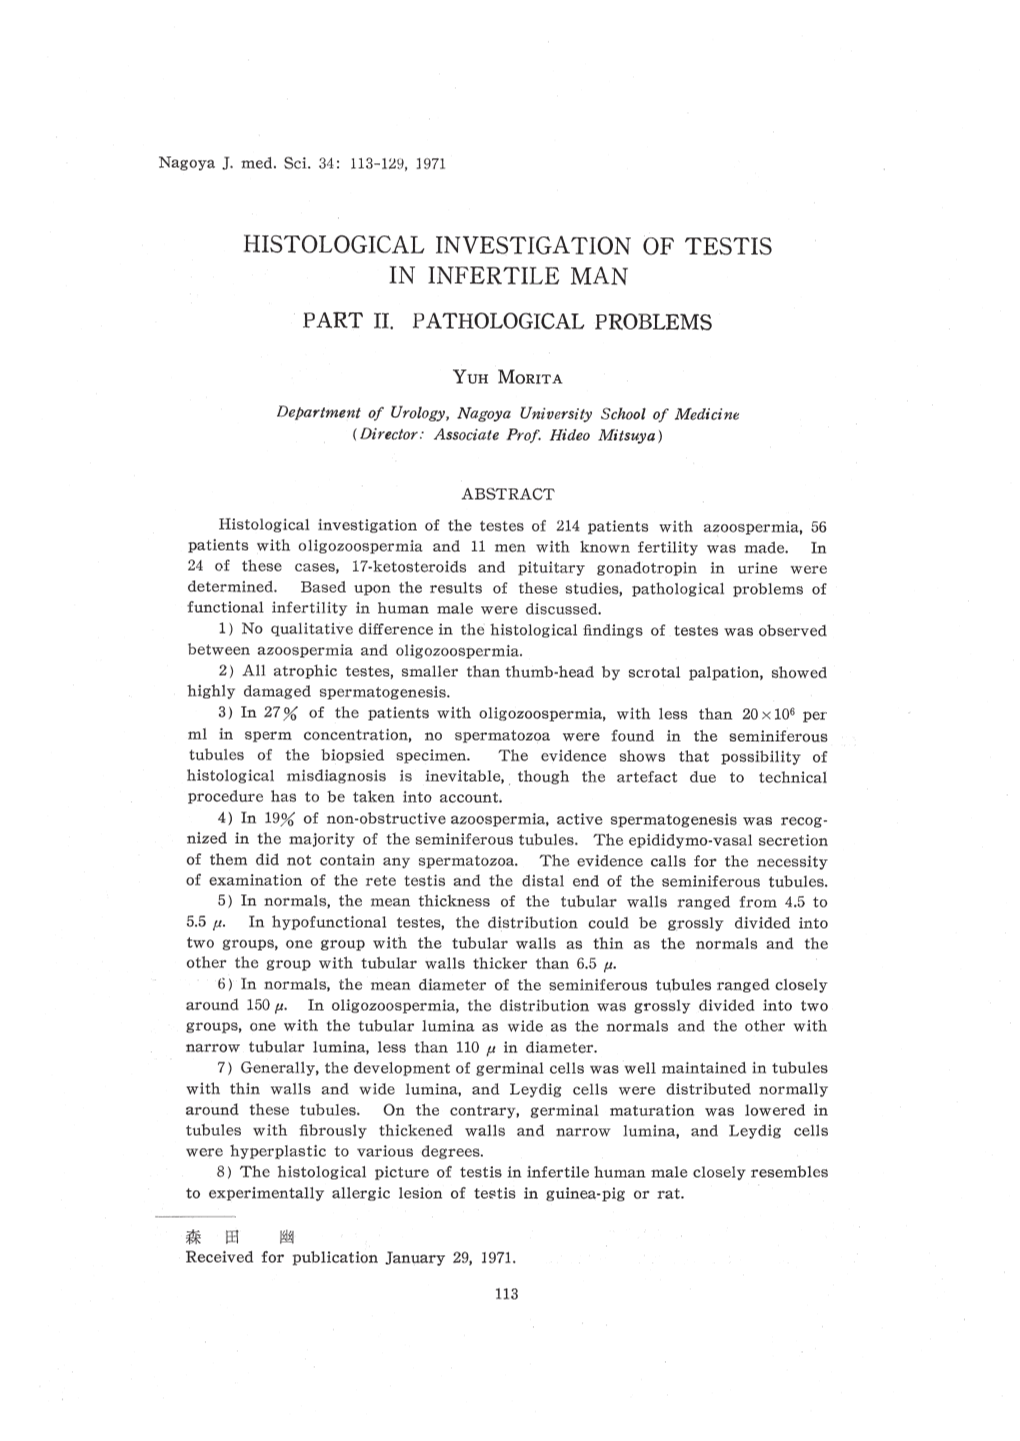 Histological Investigation of Testis in Infertile Man Part Ii